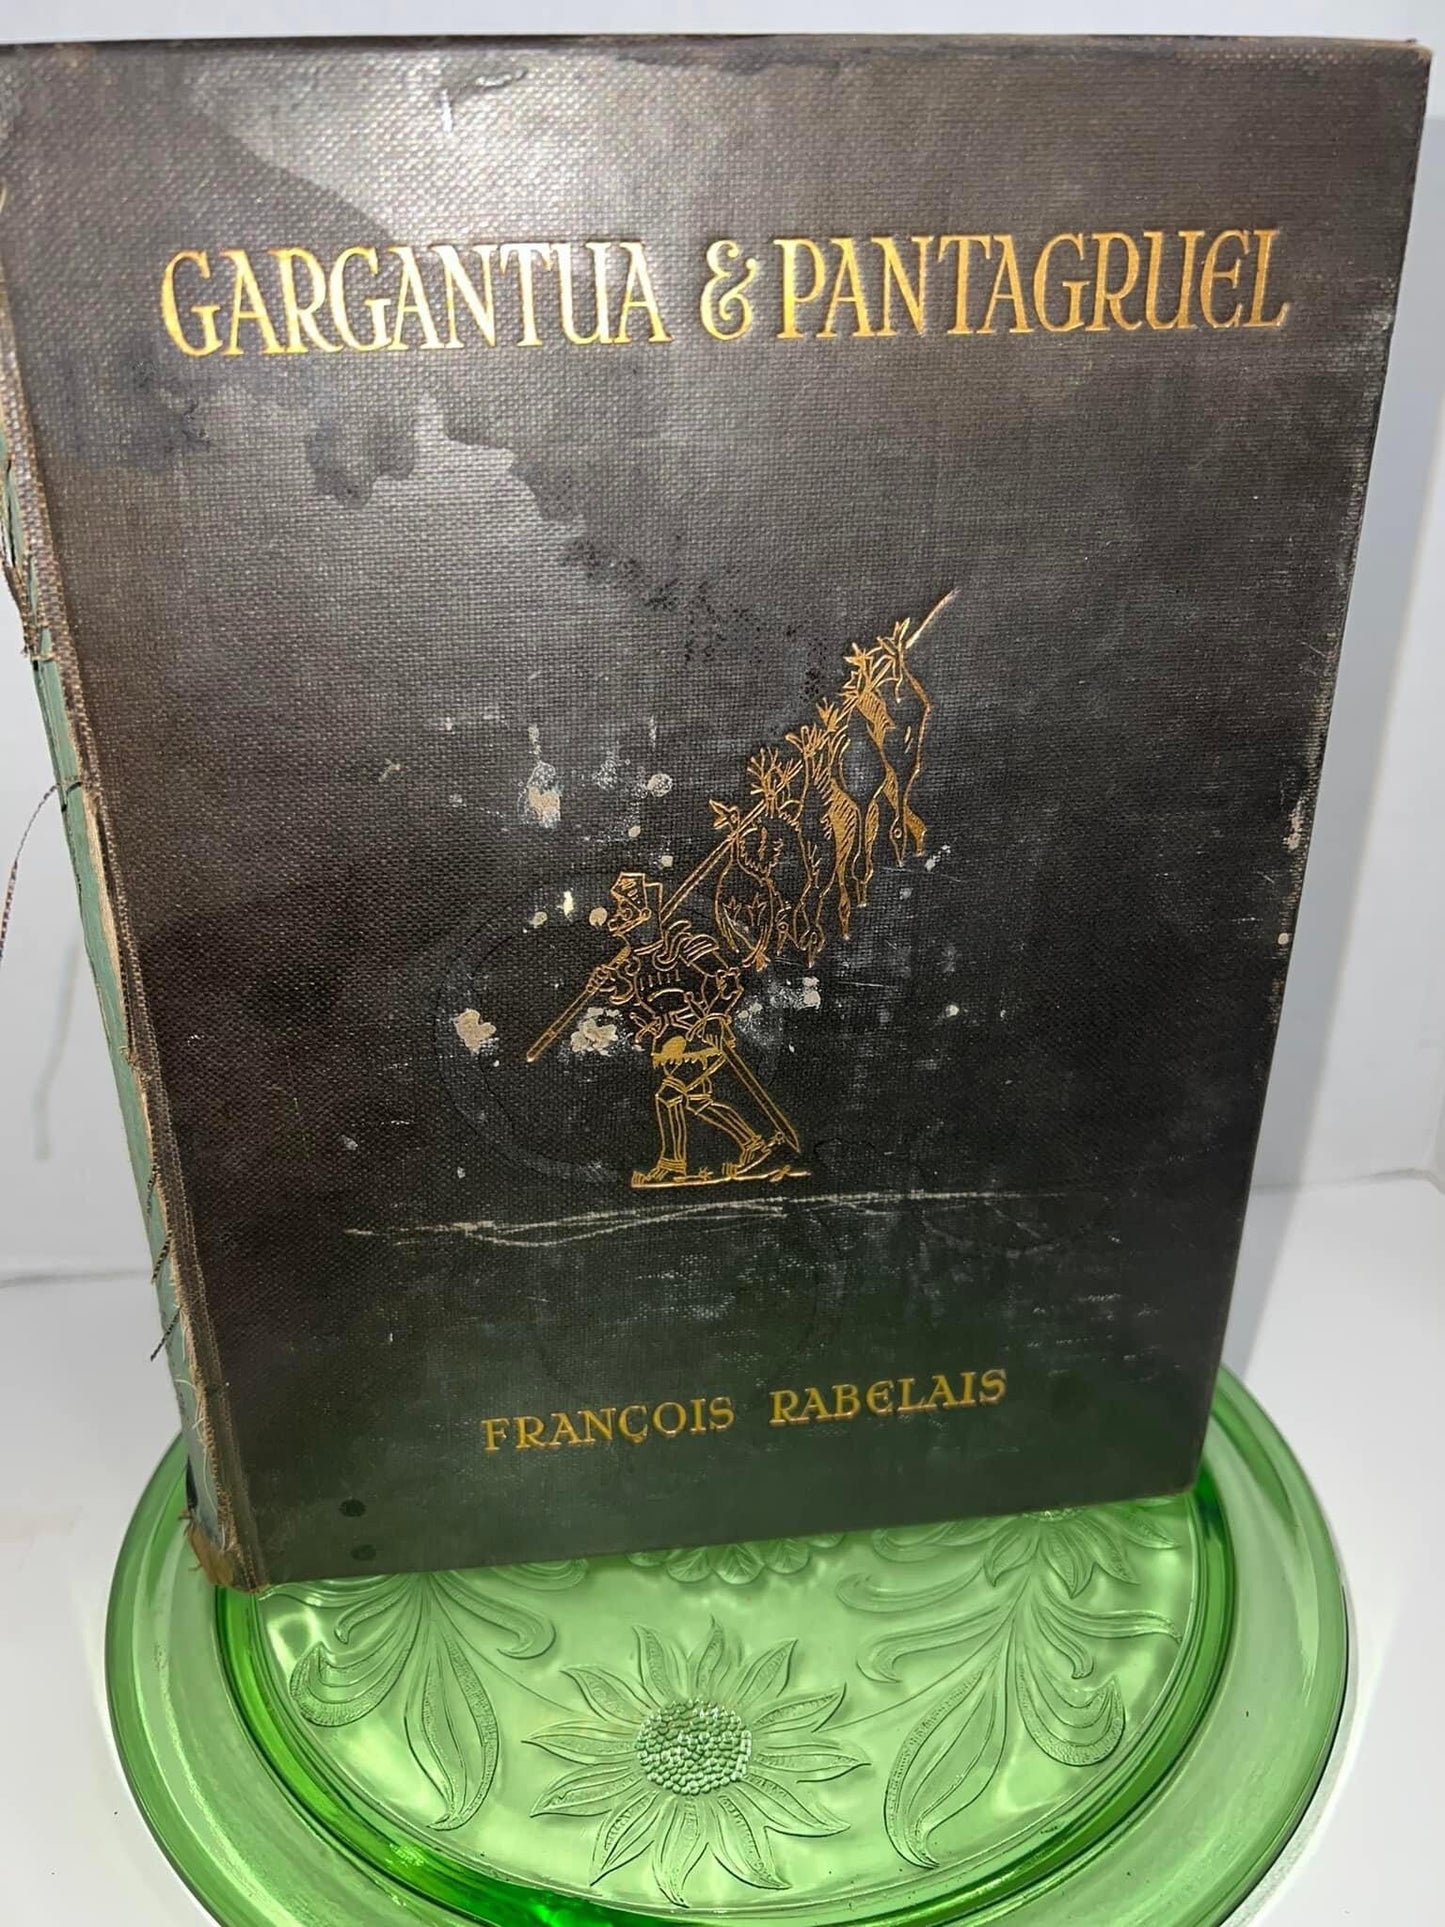 Vintage Art Deco gargantua and pantagruel C 1927 Limited edition 525 vignette illustrated